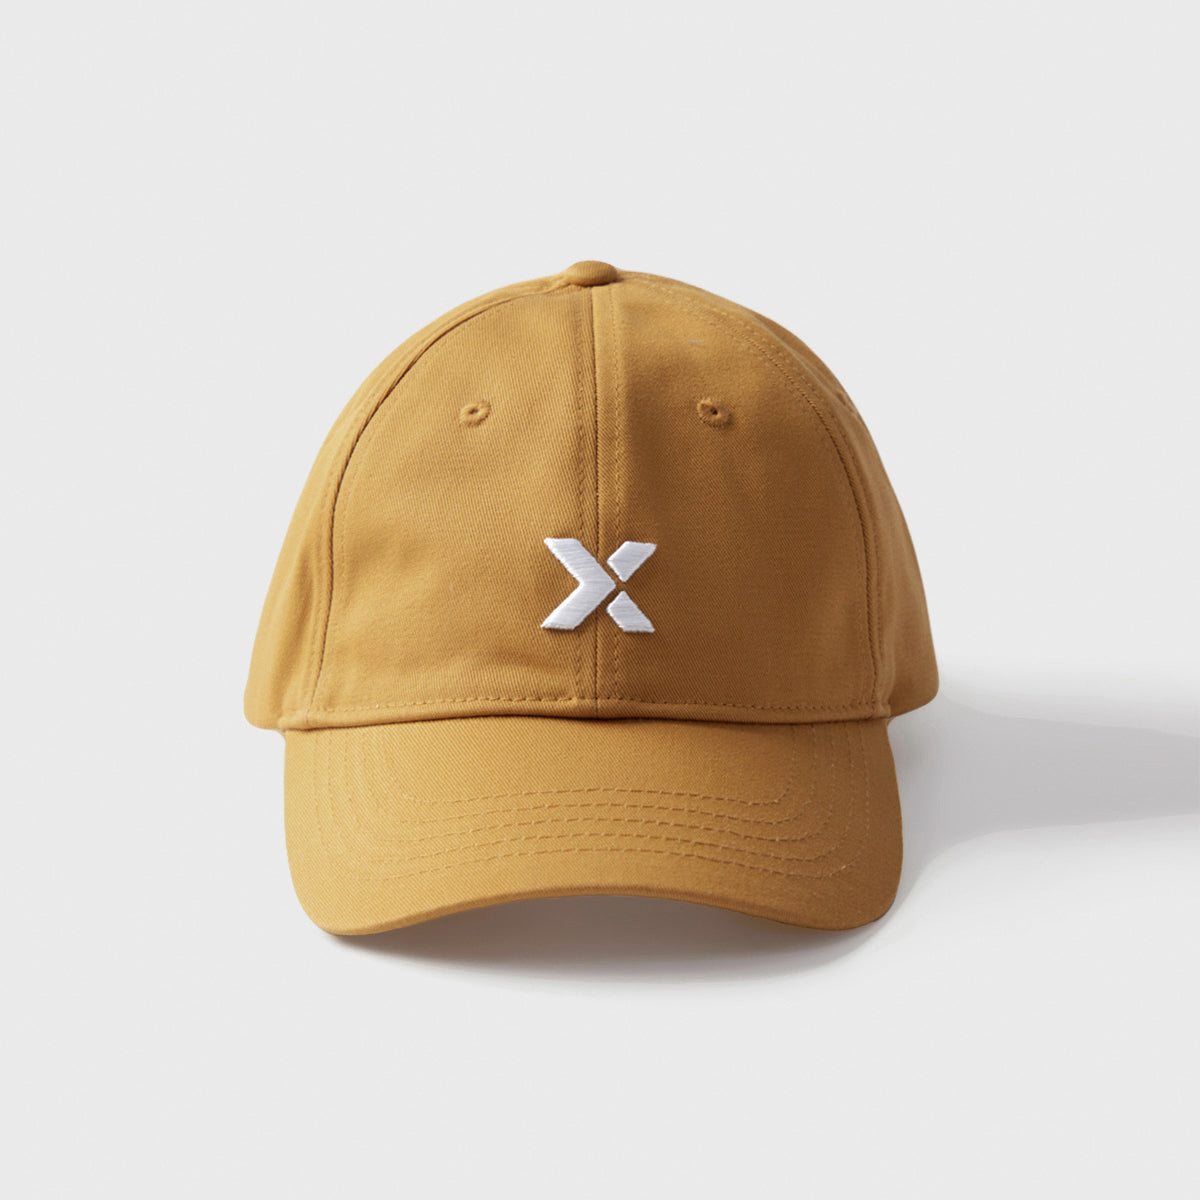 NXT Embroidery Baseball Cap